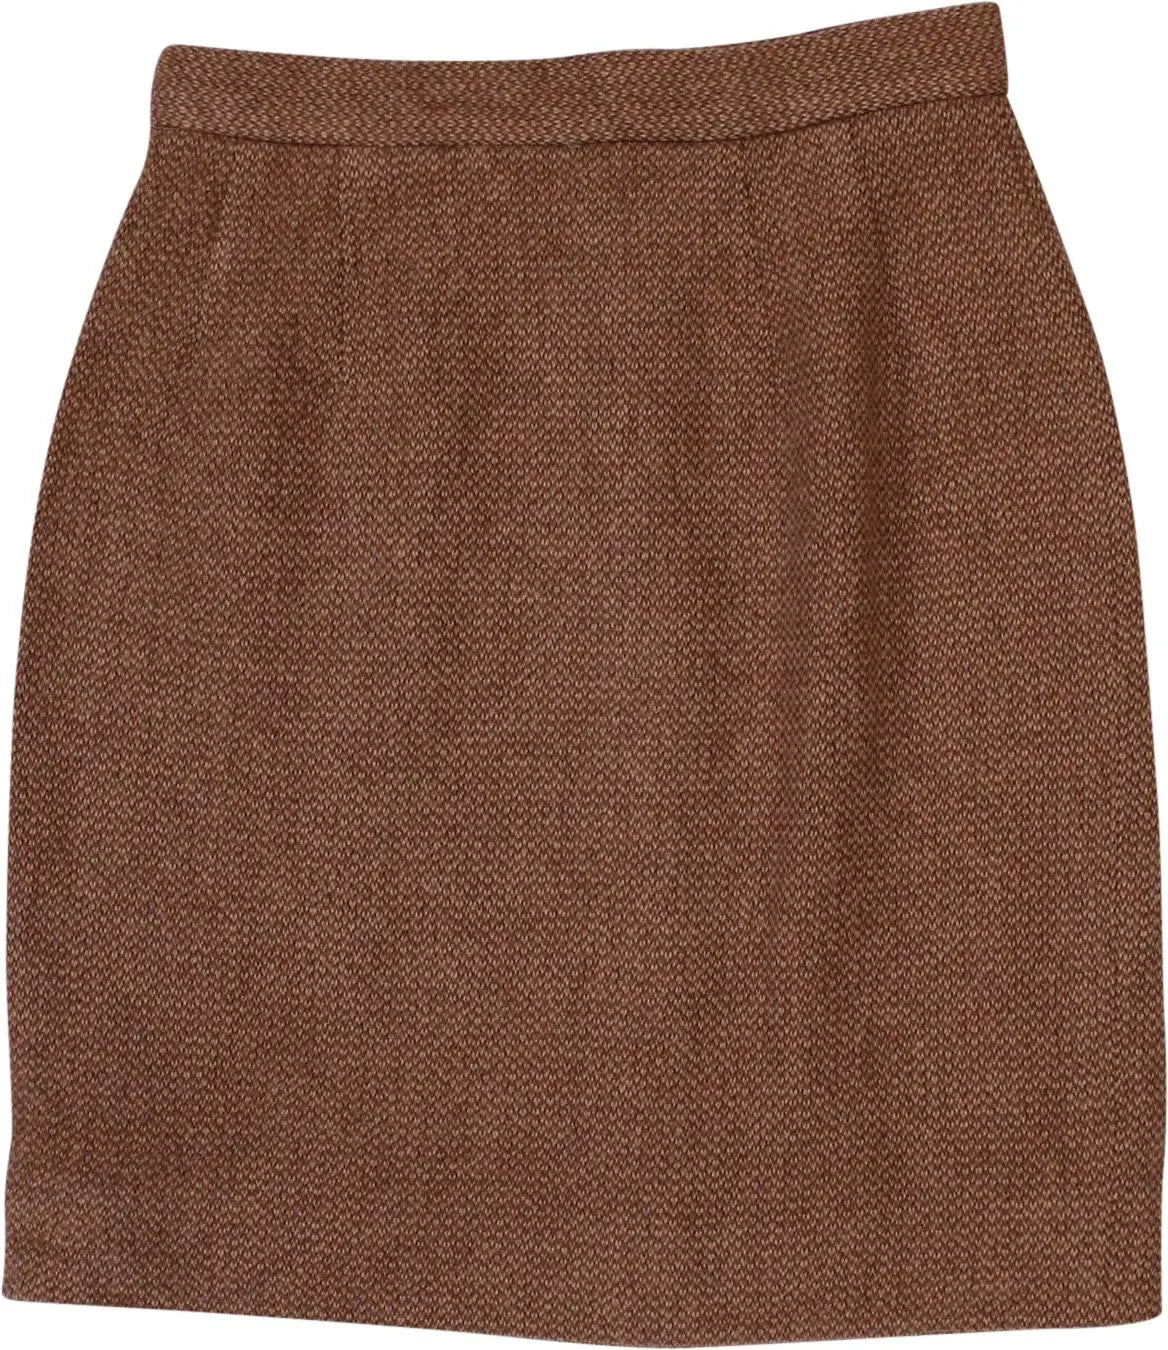 Ralph Lauren - Wool Skirt by Ralph Lauren- ThriftTale.com - Vintage and second handclothing